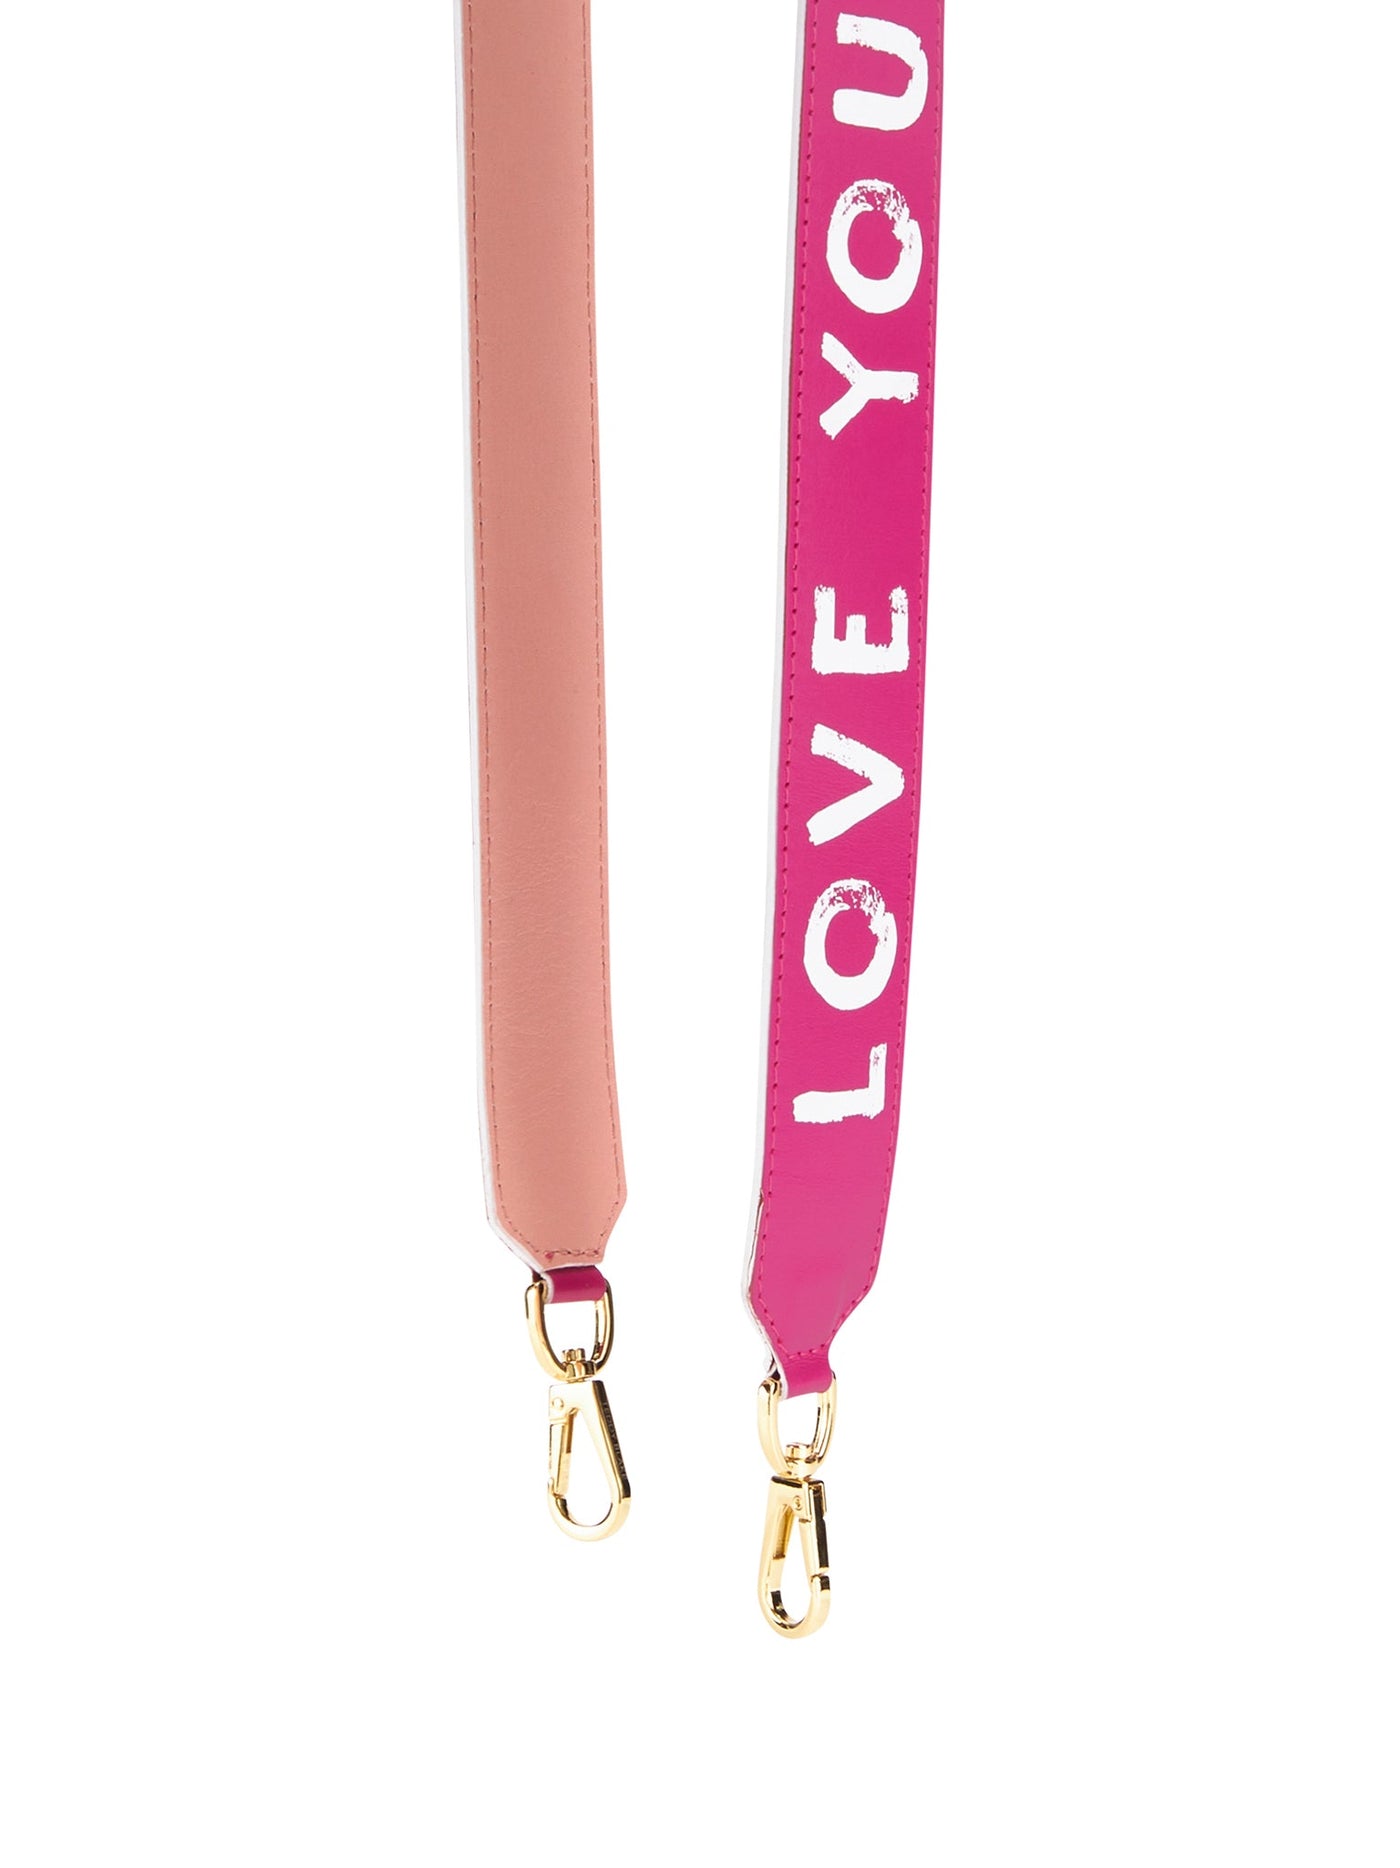 Mitony Love Strap Gold - Fuchsia&Pink